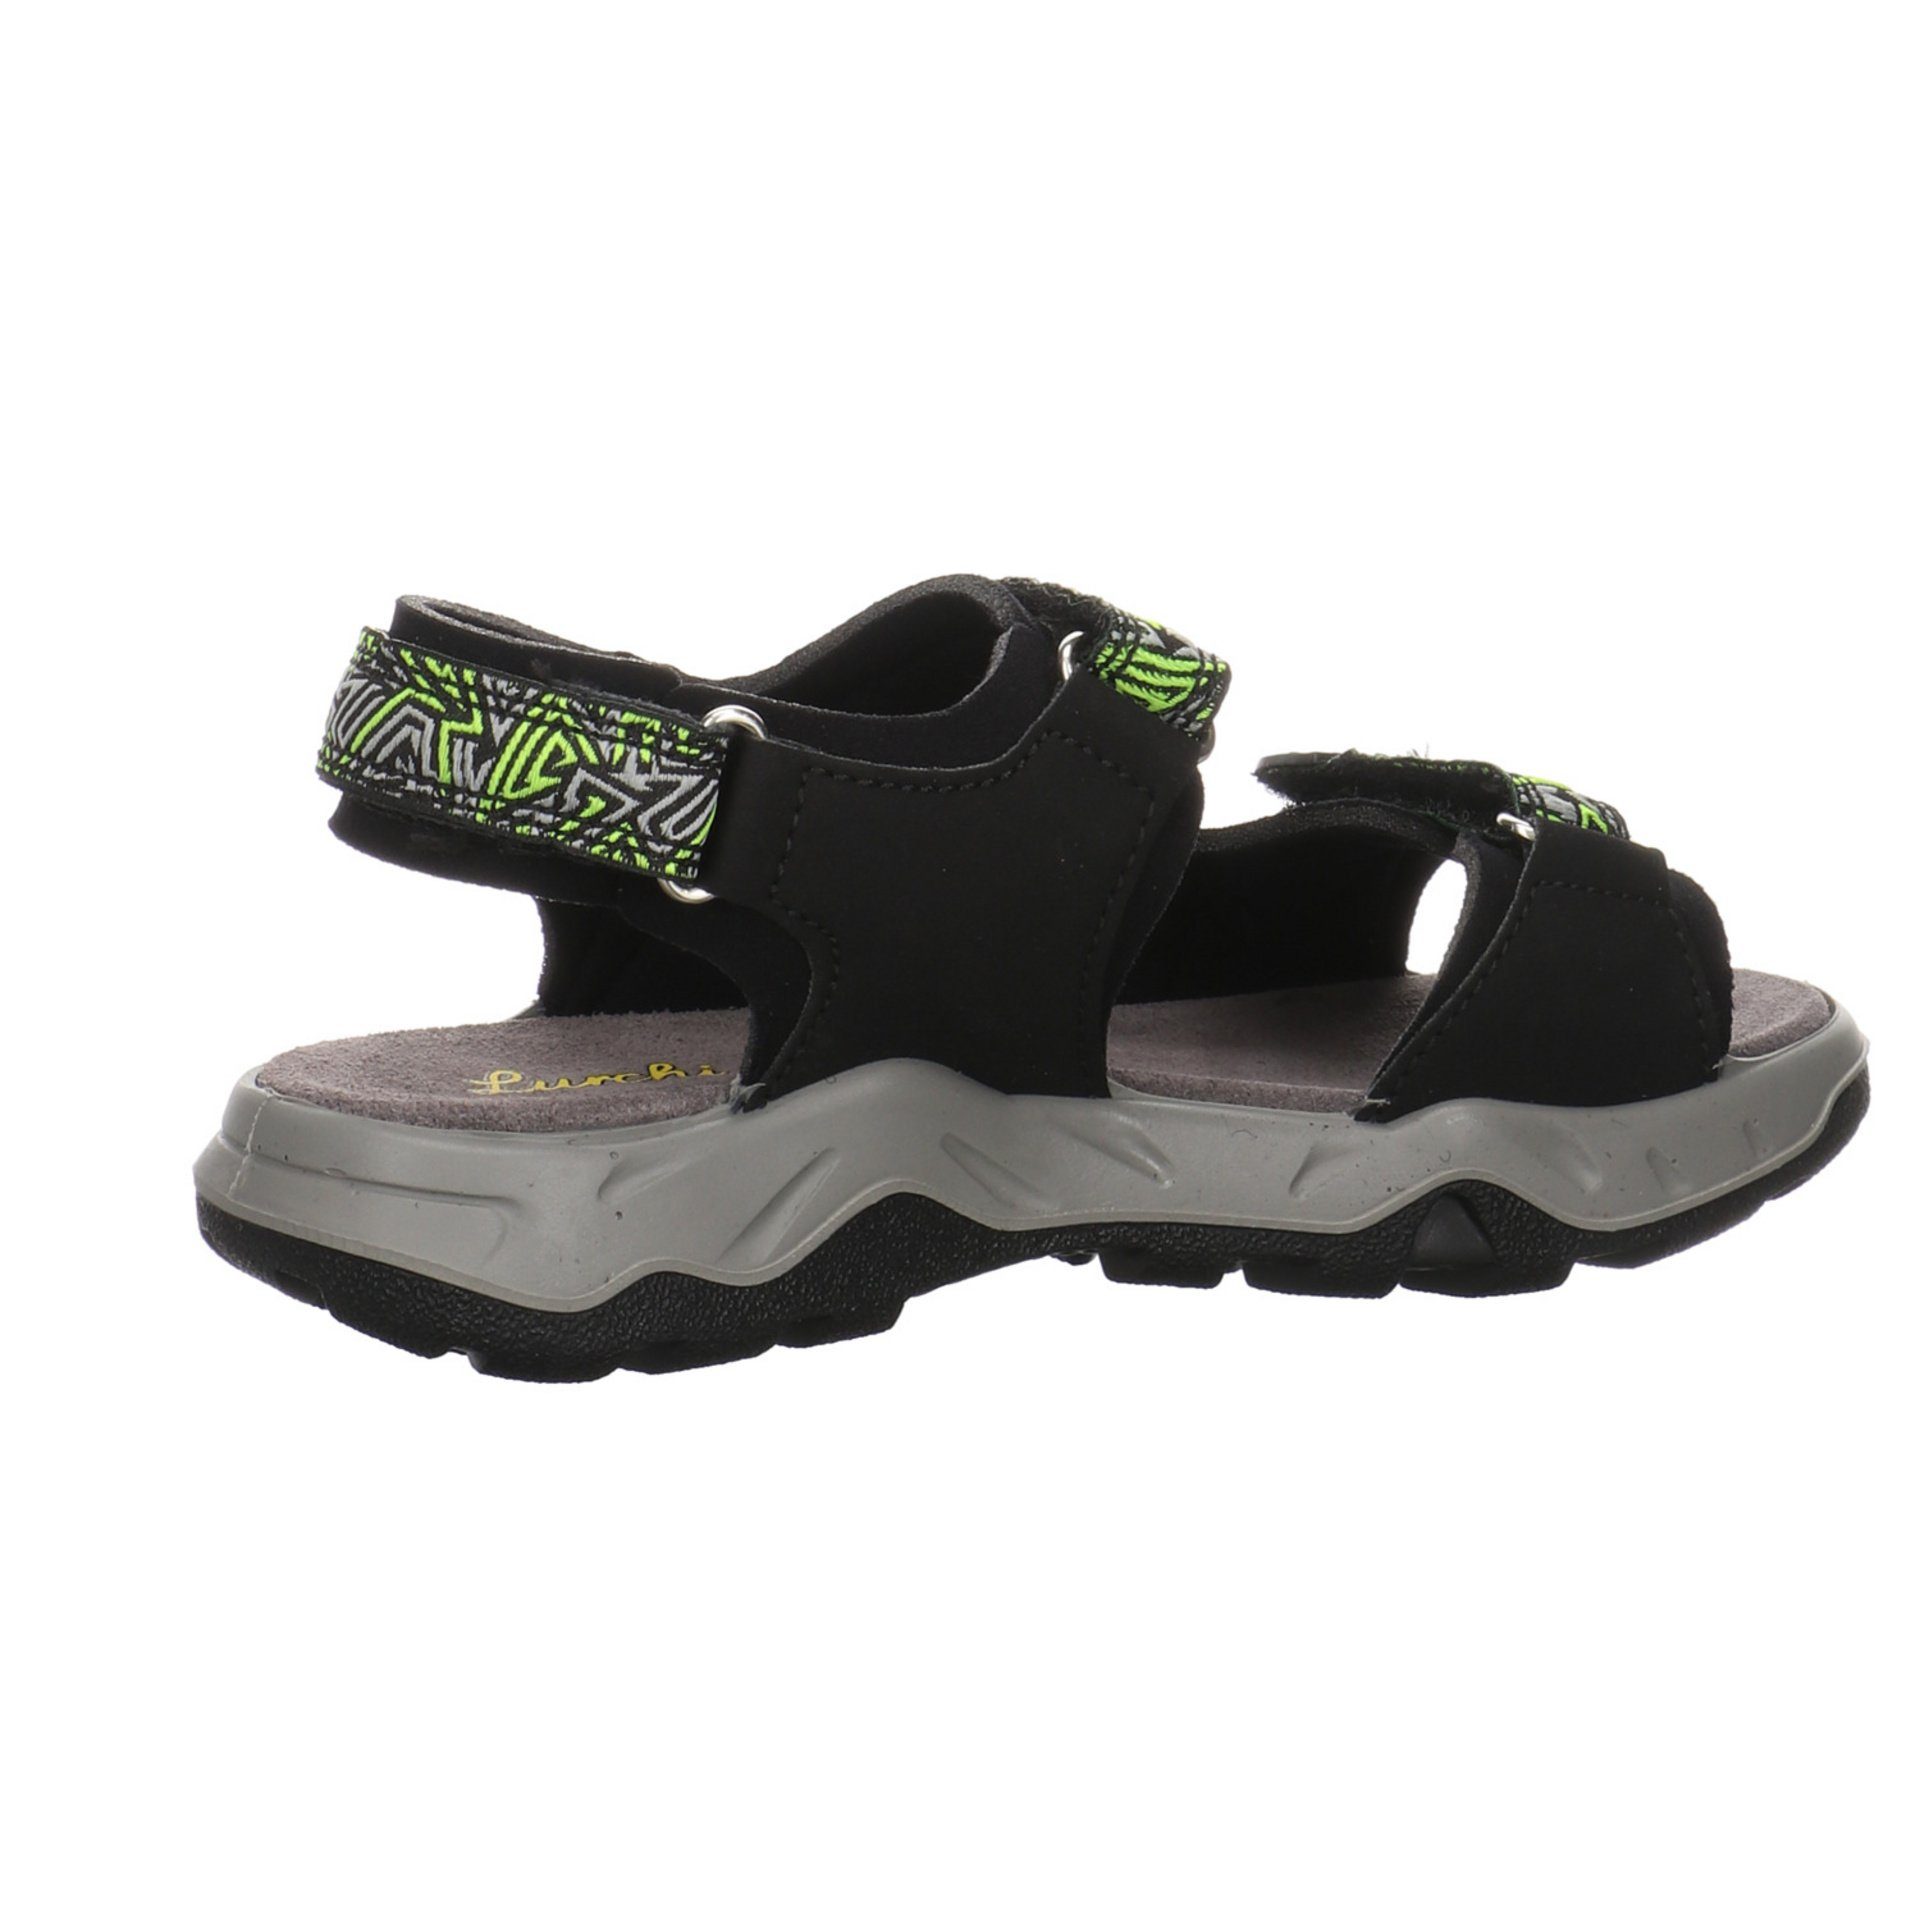 Schuhe Sandale Black Synthetikkombination Jungen Kinderschuhe Sandale Lurchi Salamander Odono Sandalen Multi